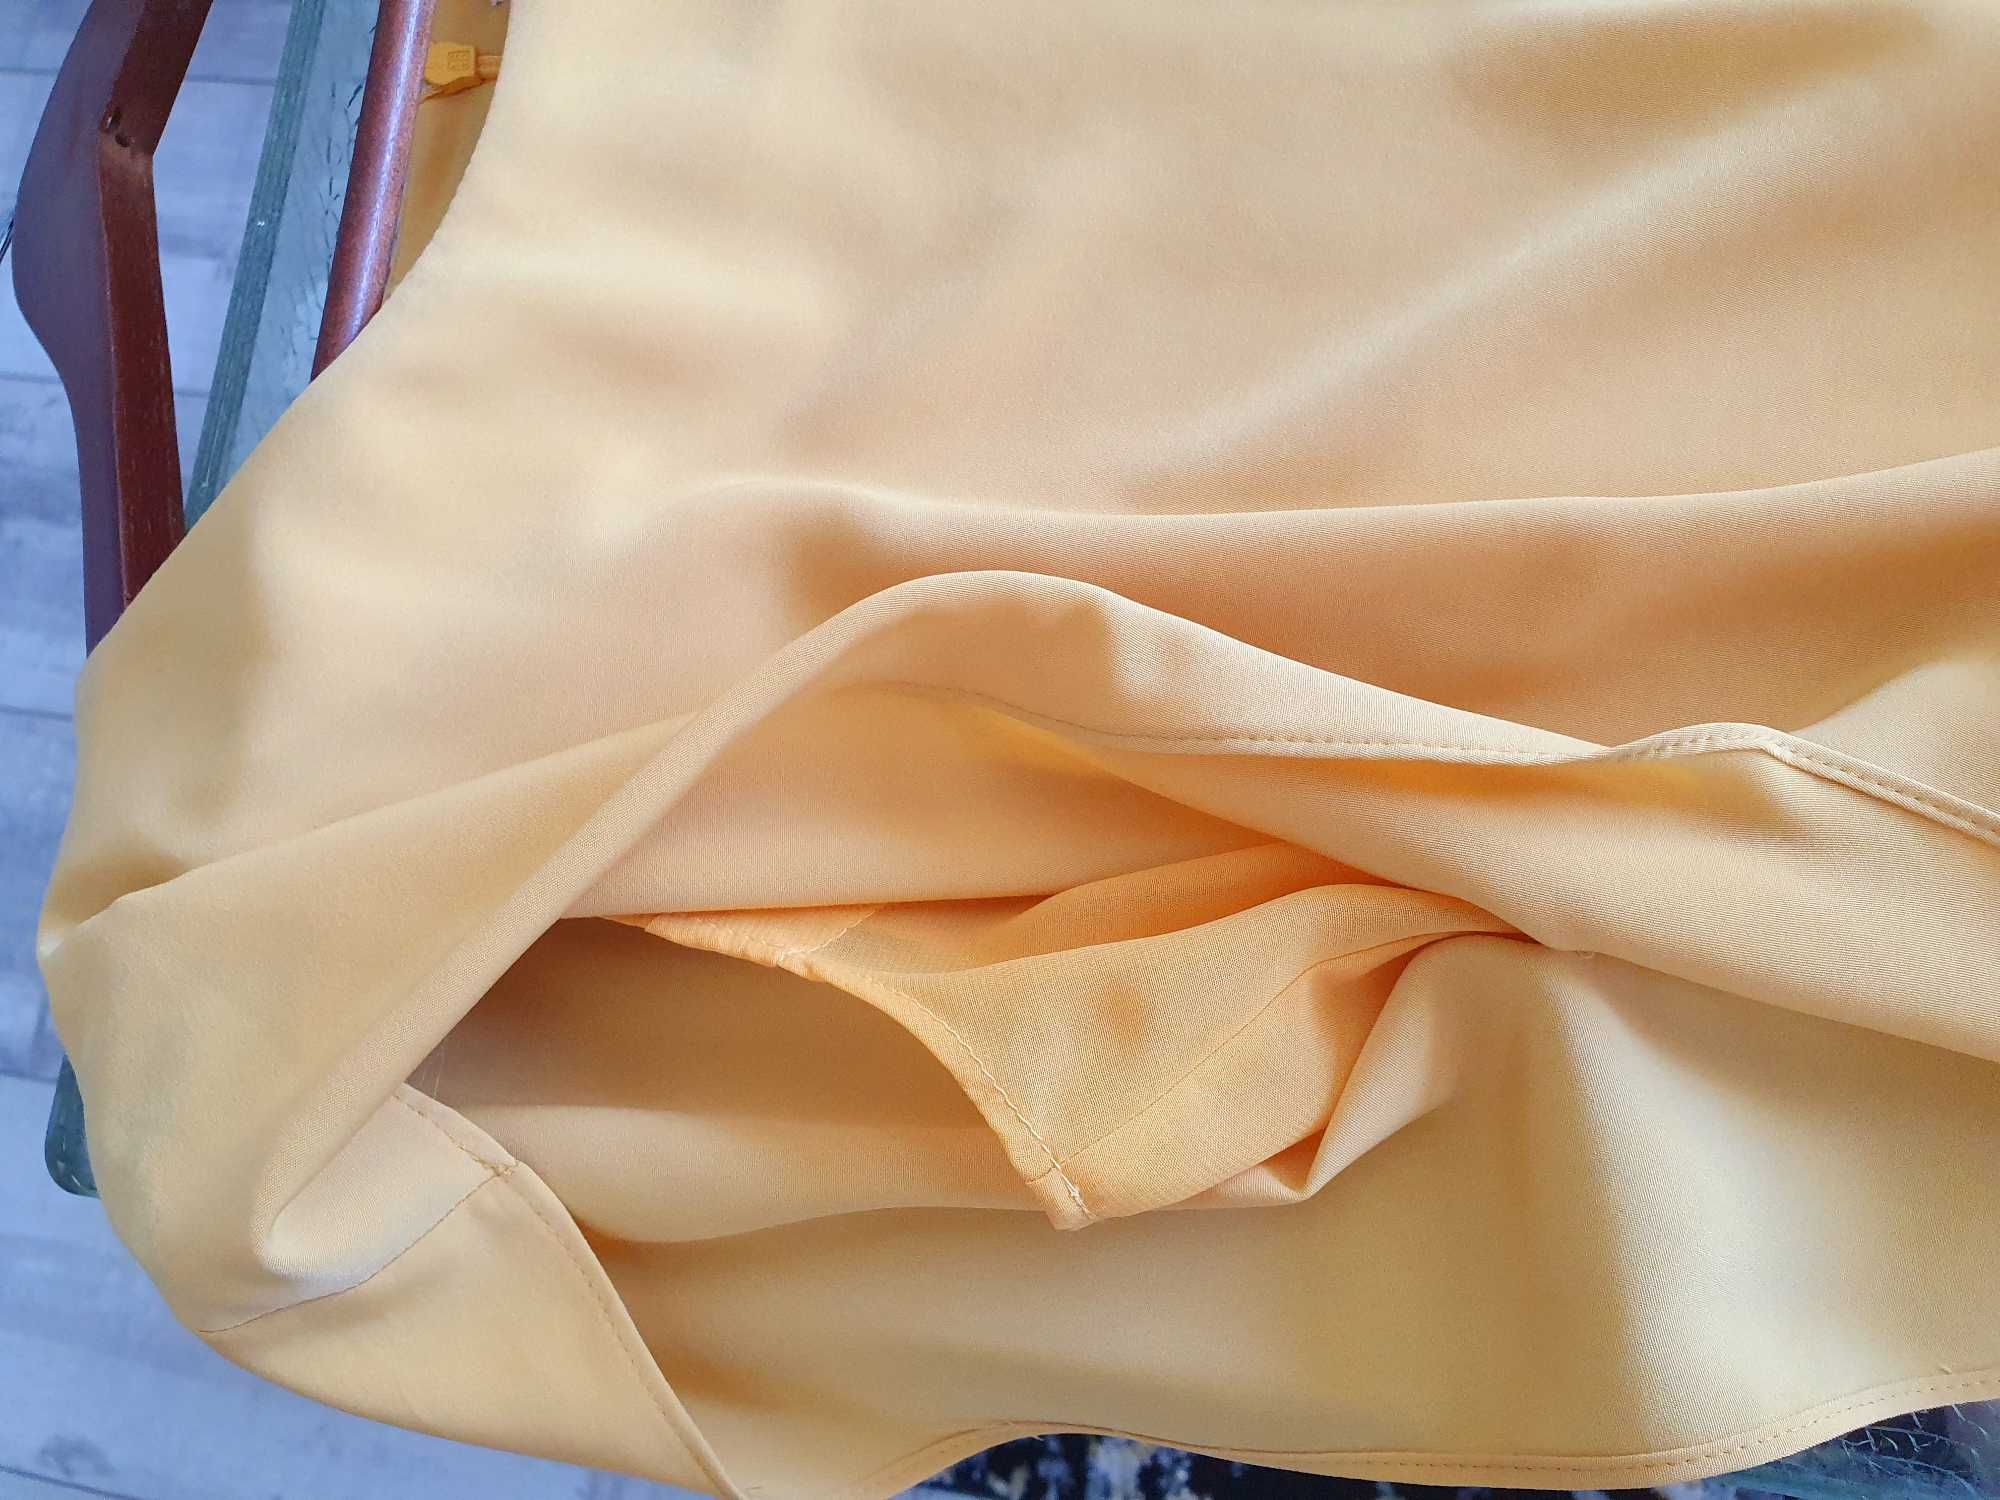 Żółta sukienka koktajlowa Taranko rozmiar 34